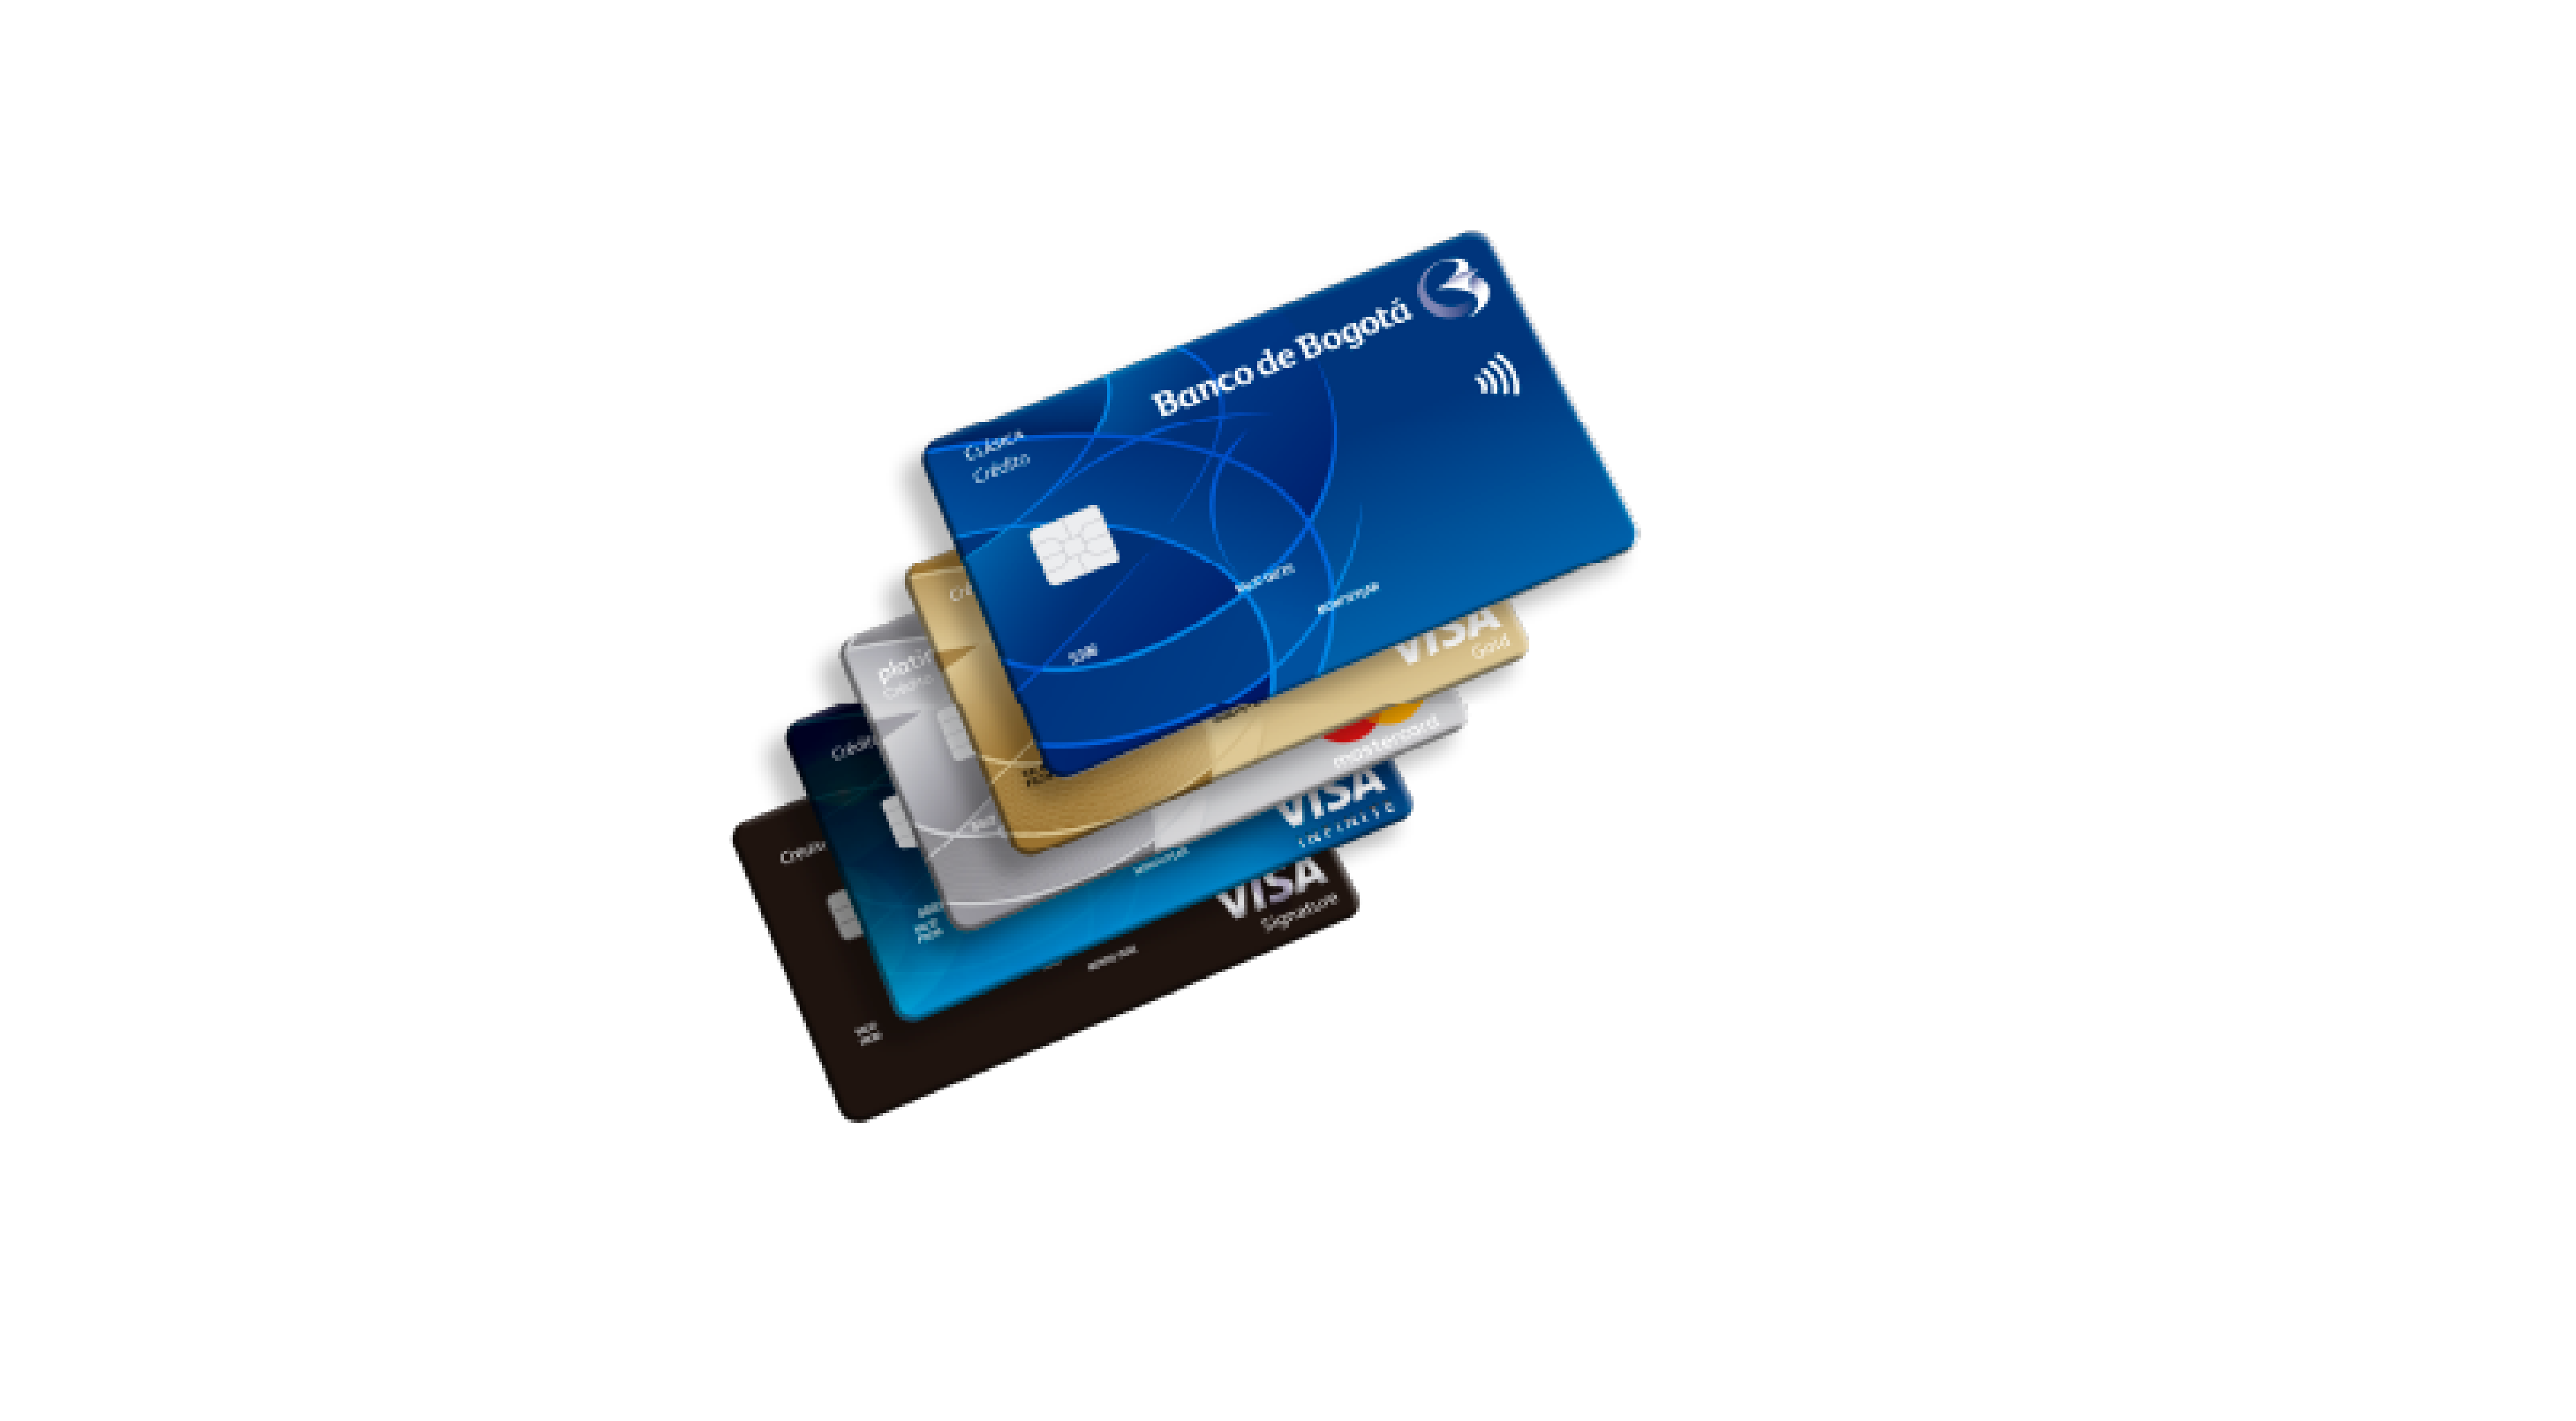 Abanico tarjetas crédito Banco de Bogotá